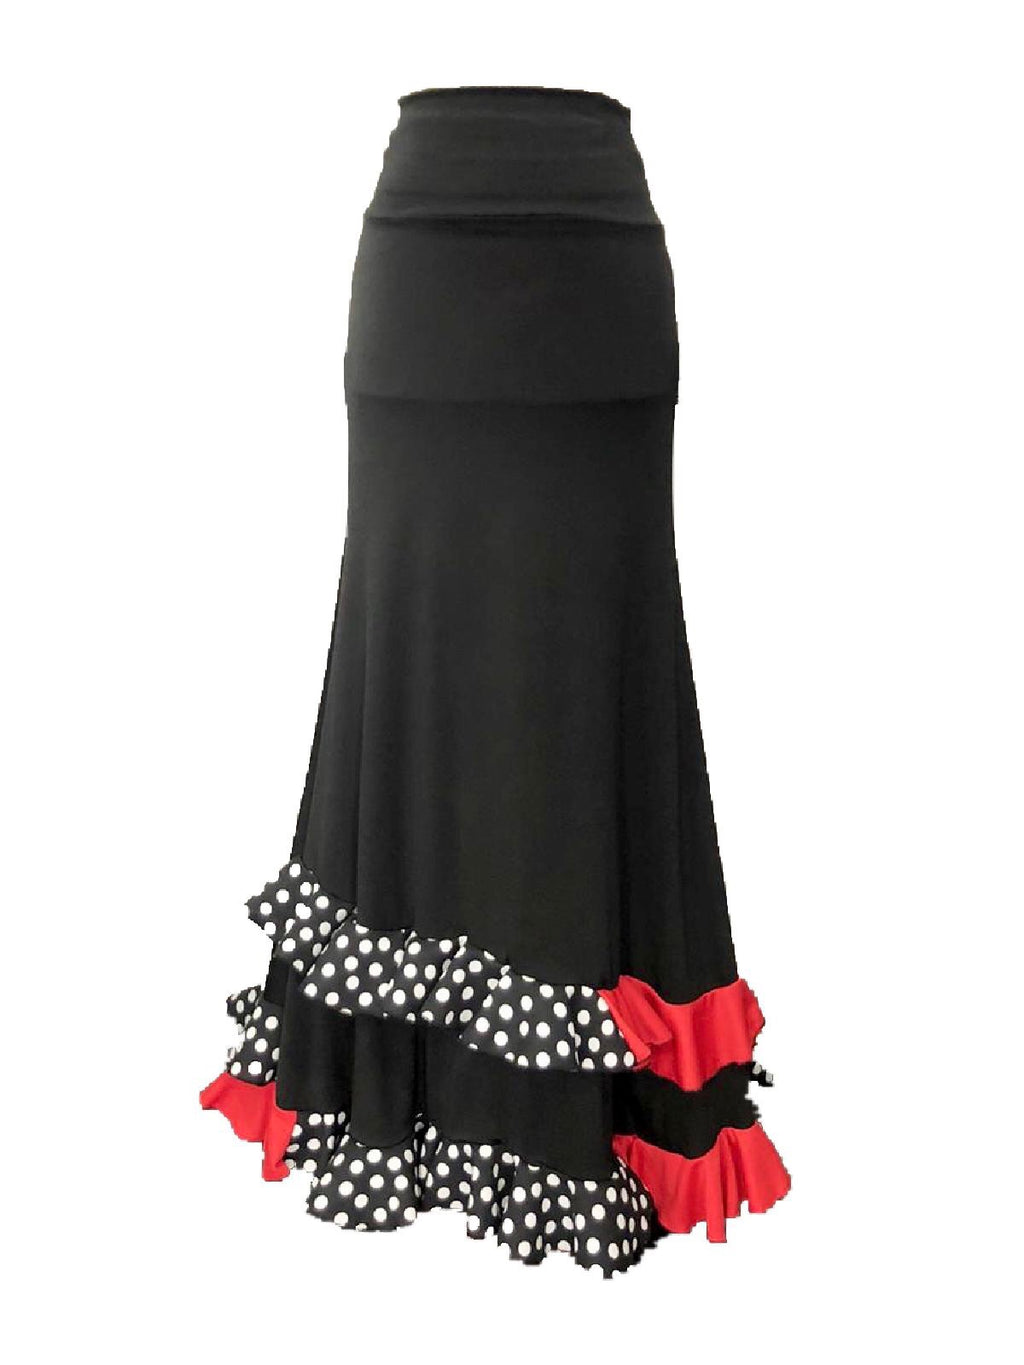 Falda flamenca en lycra negra con dos volantes